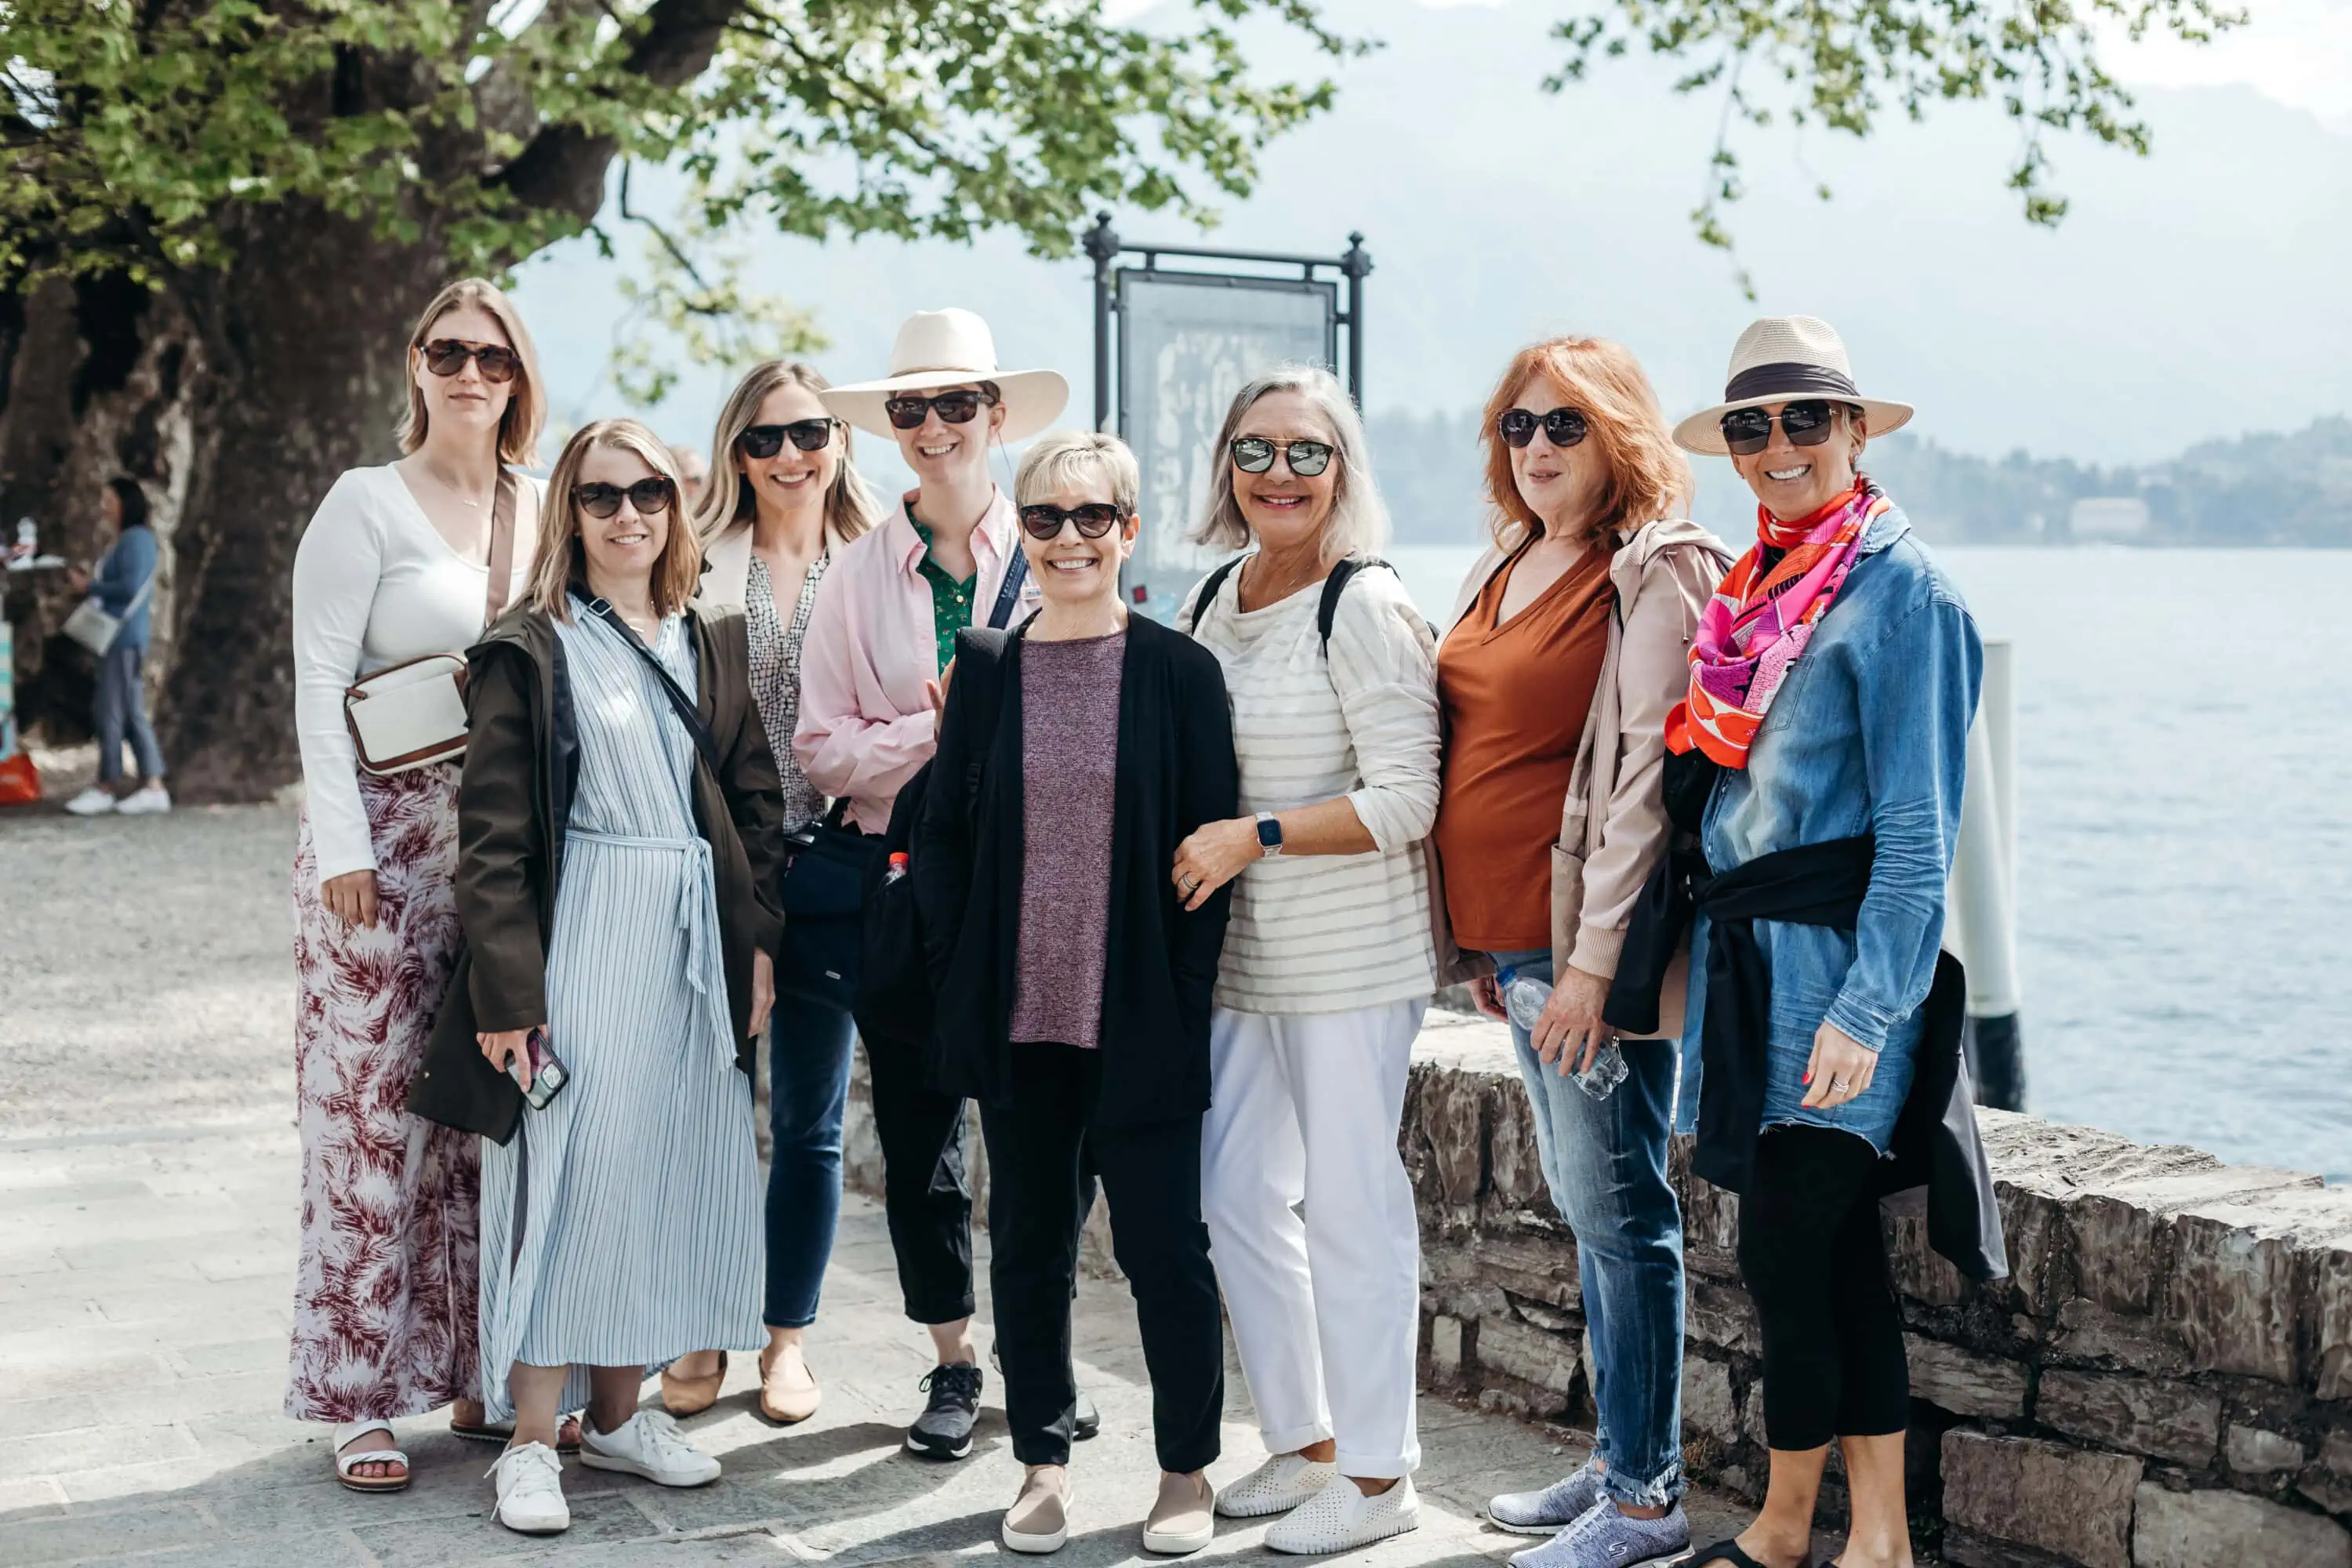 Our group visiting Lake Como